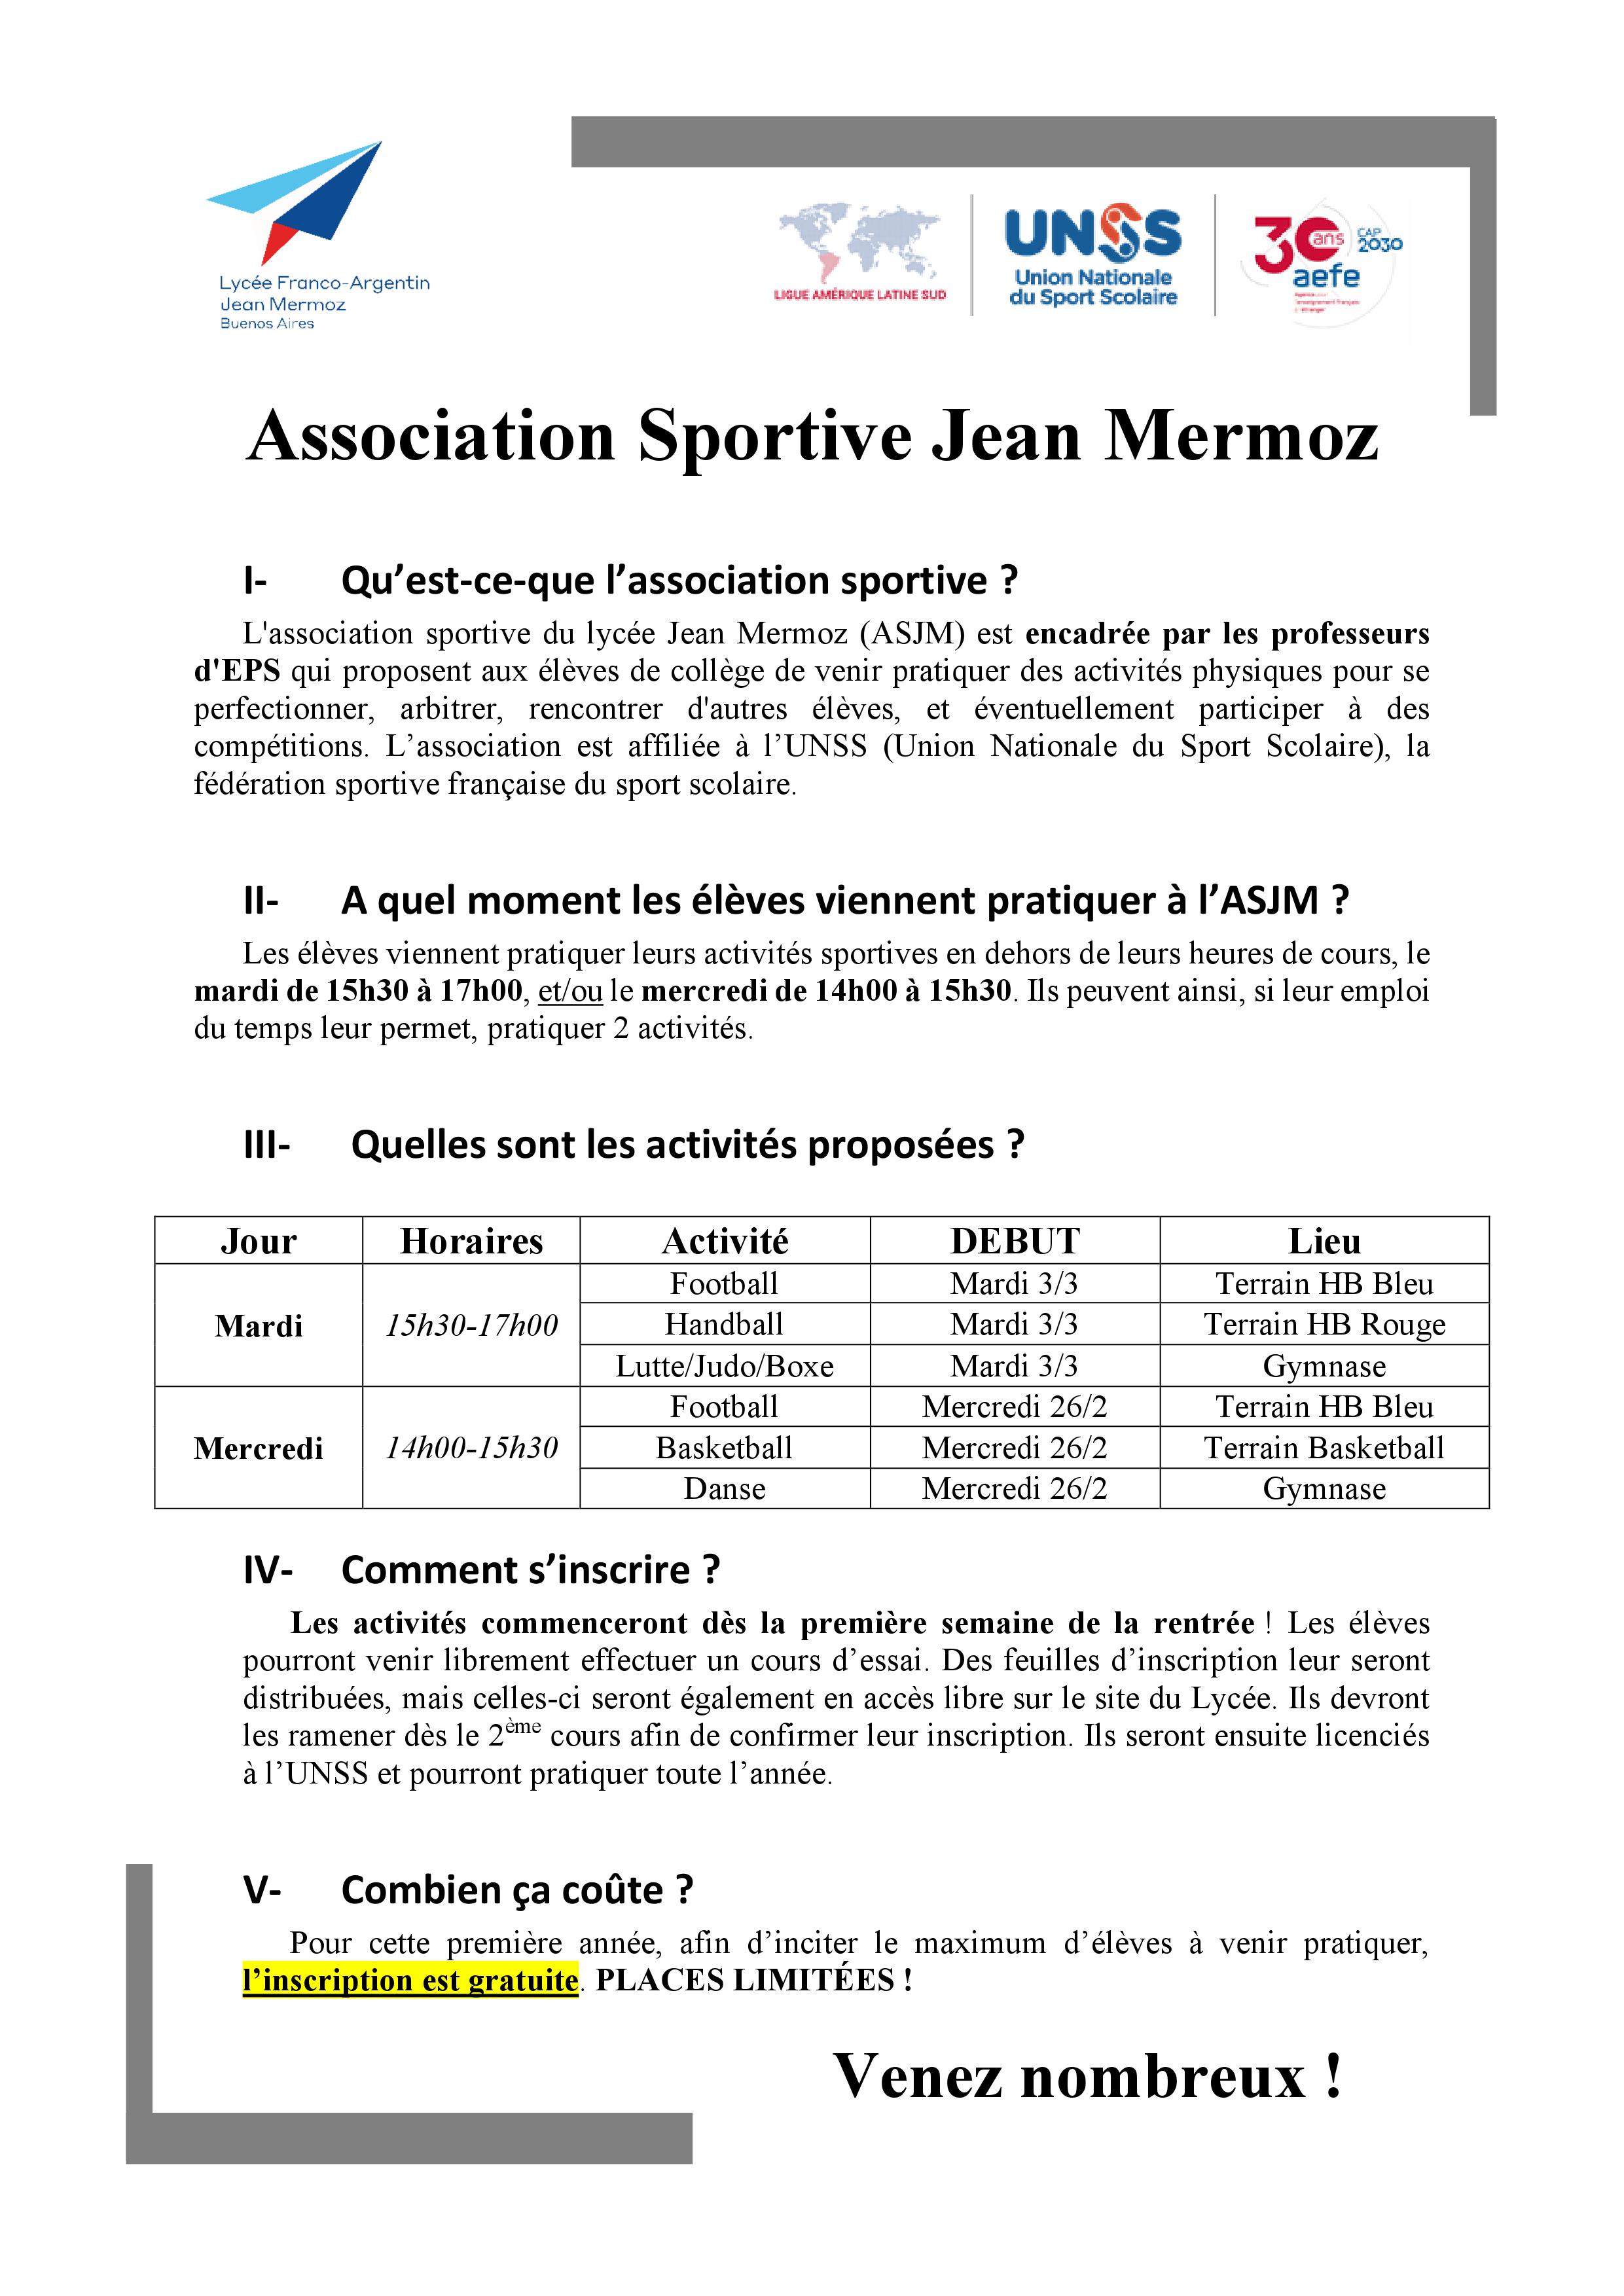 Présentation Association Sportive Jean Mermoz 2020